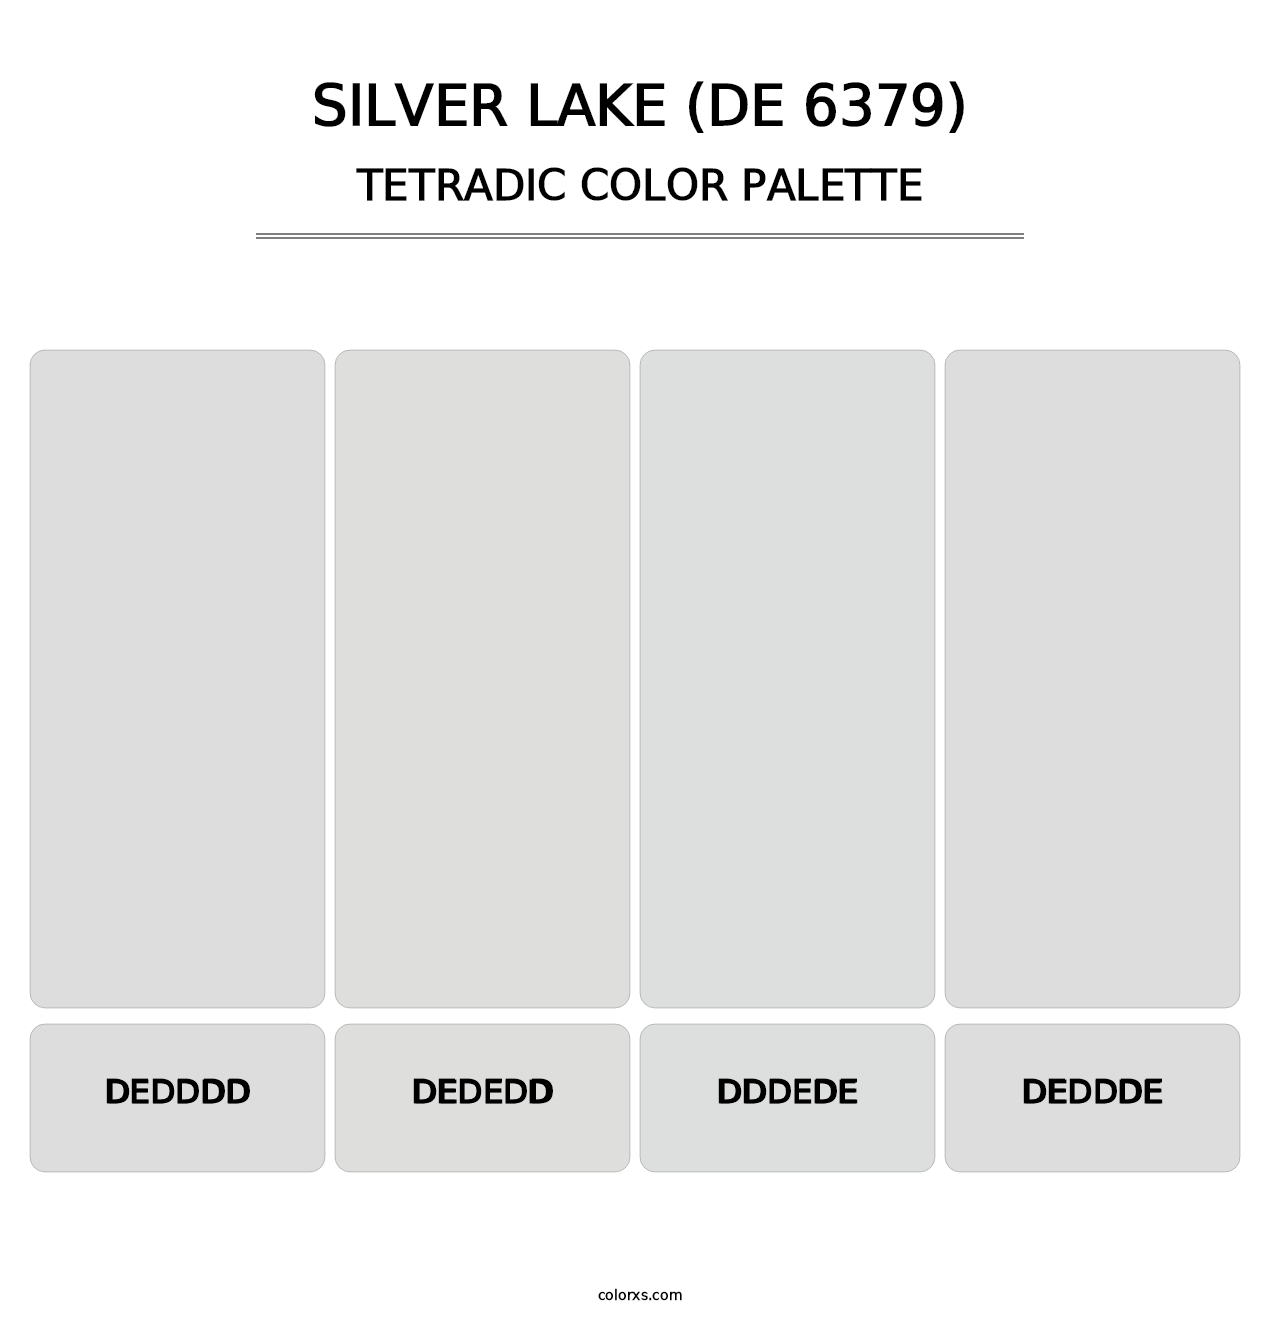 Silver Lake (DE 6379) - Tetradic Color Palette